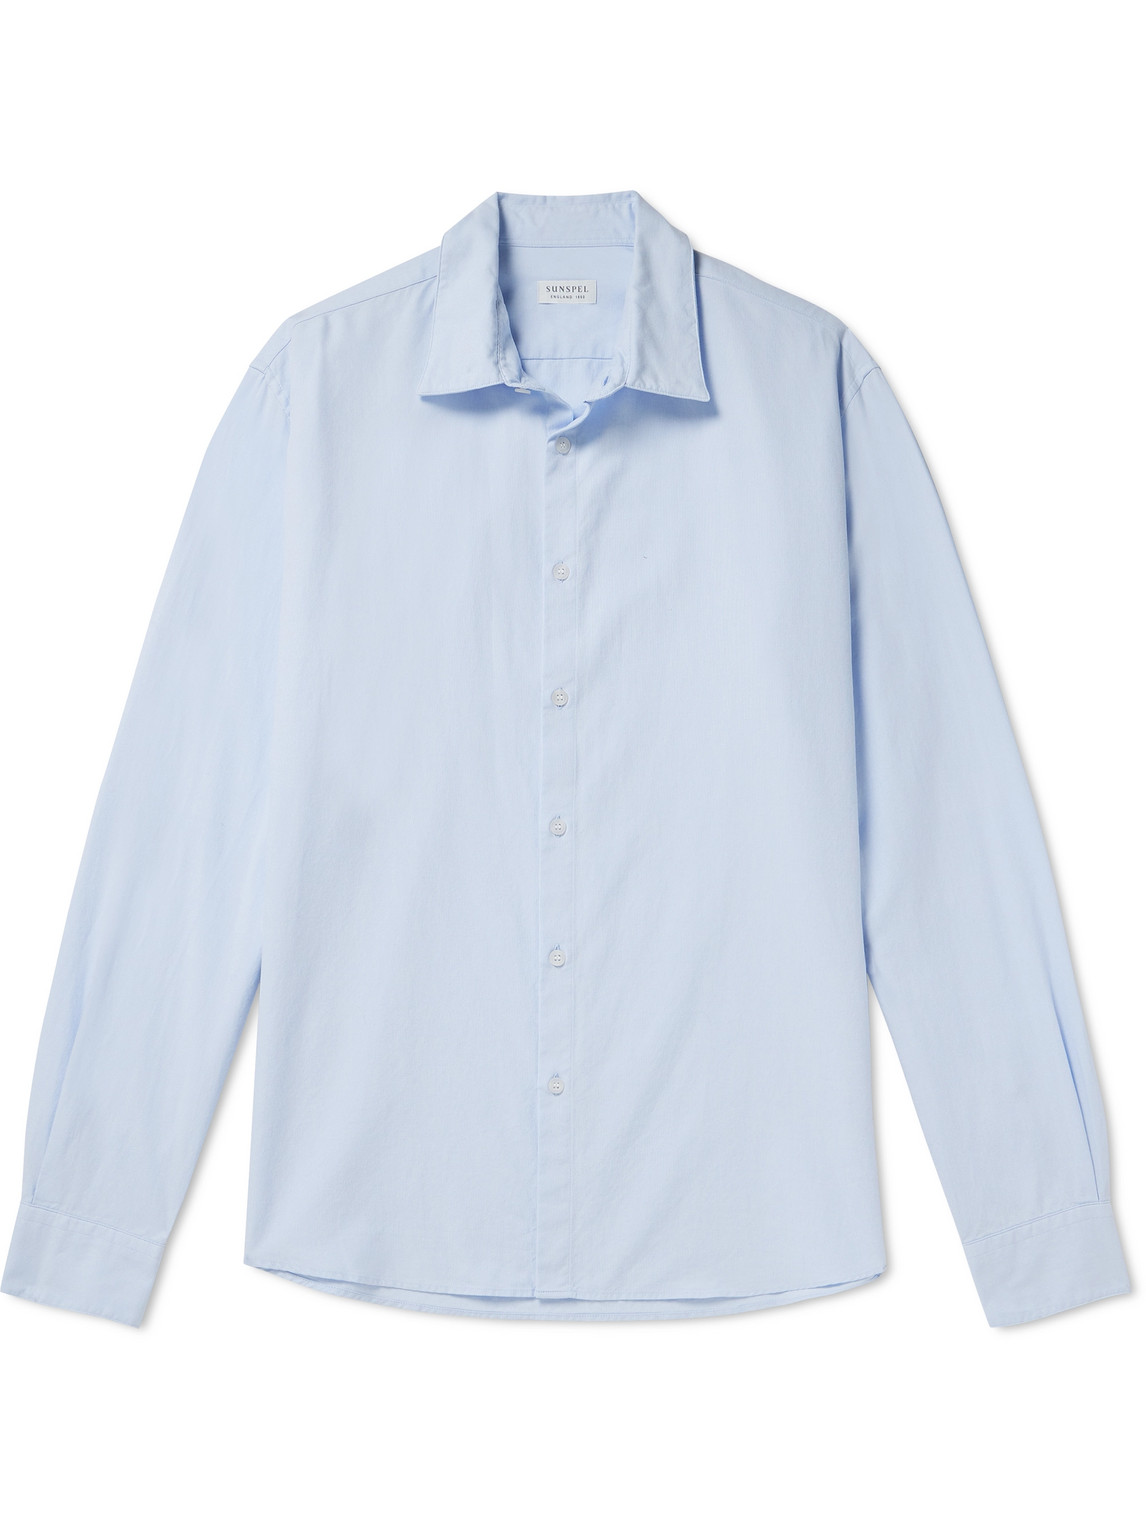 Sunspel Cotton Oxford Shirt In Blue